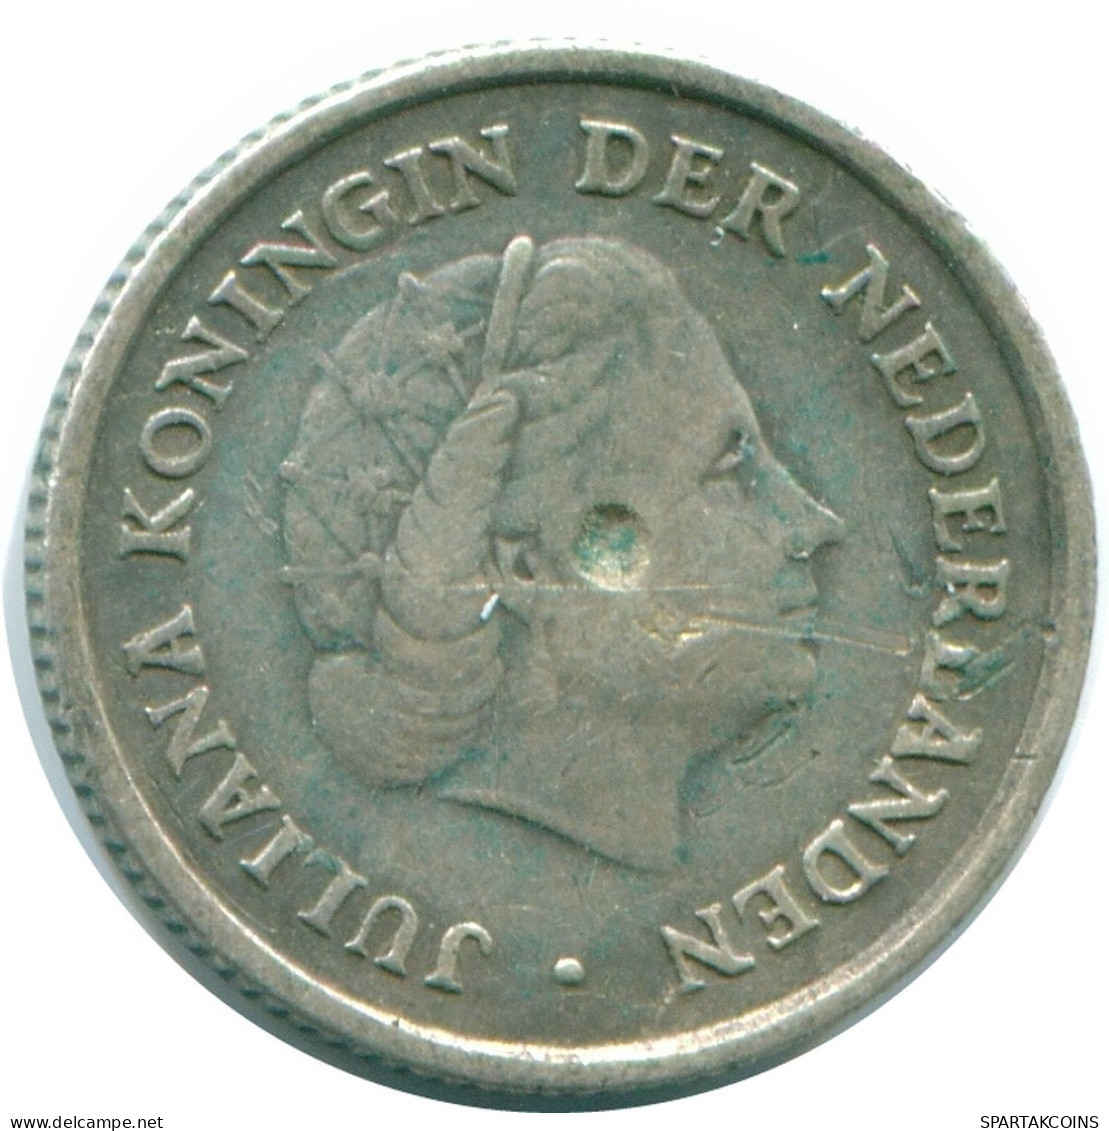 1/10 GULDEN 1962 NETHERLANDS ANTILLES SILVER Colonial Coin #NL12406.3.U.A - Antilles Néerlandaises